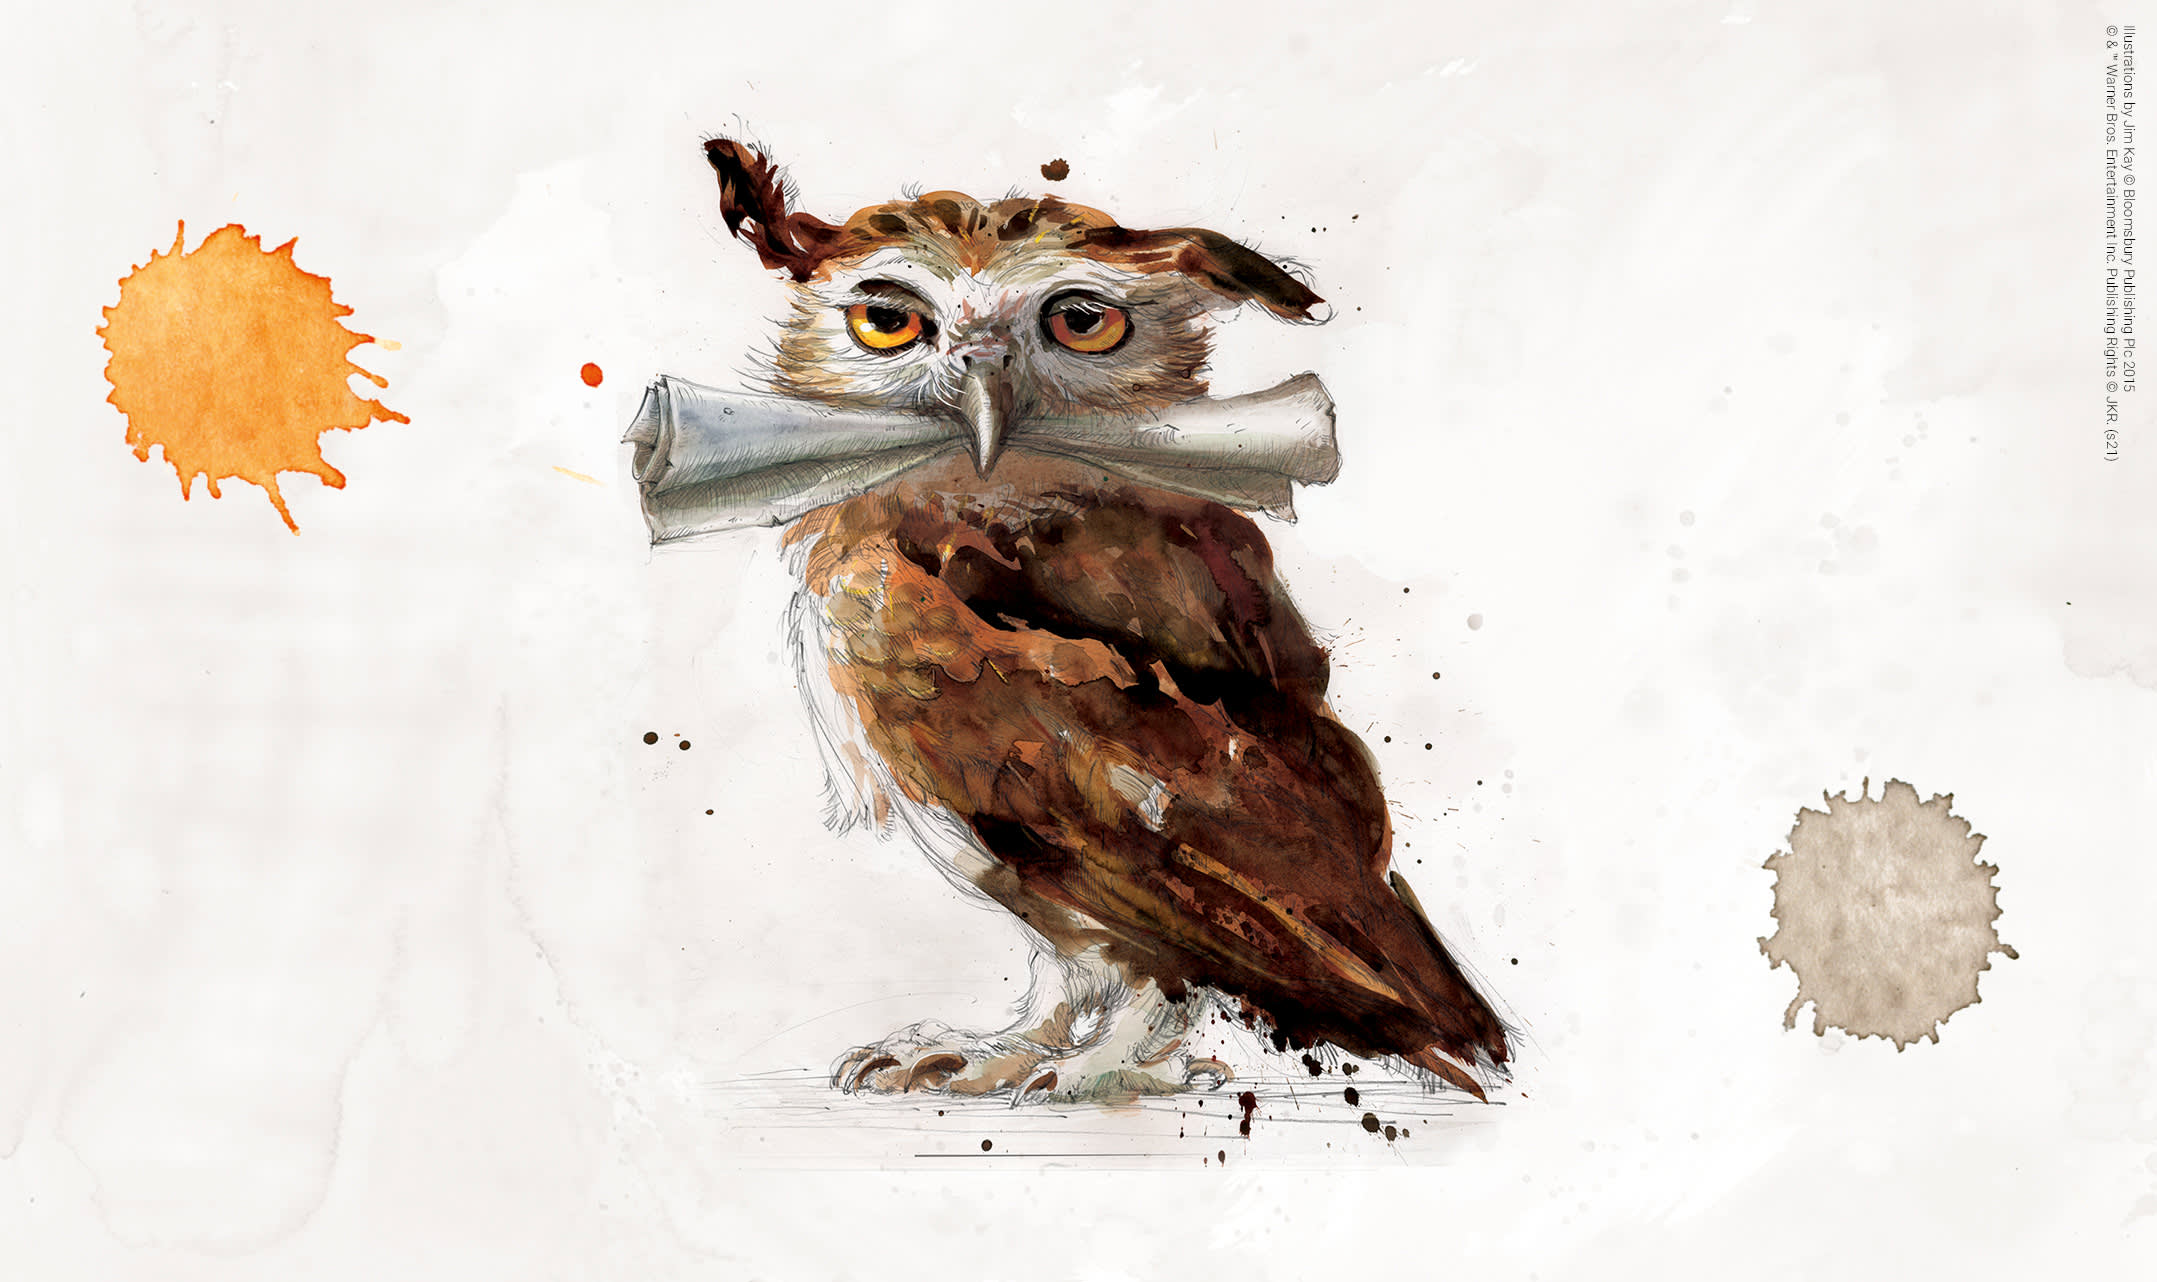 HPRM-week-one-jim-kay-owl